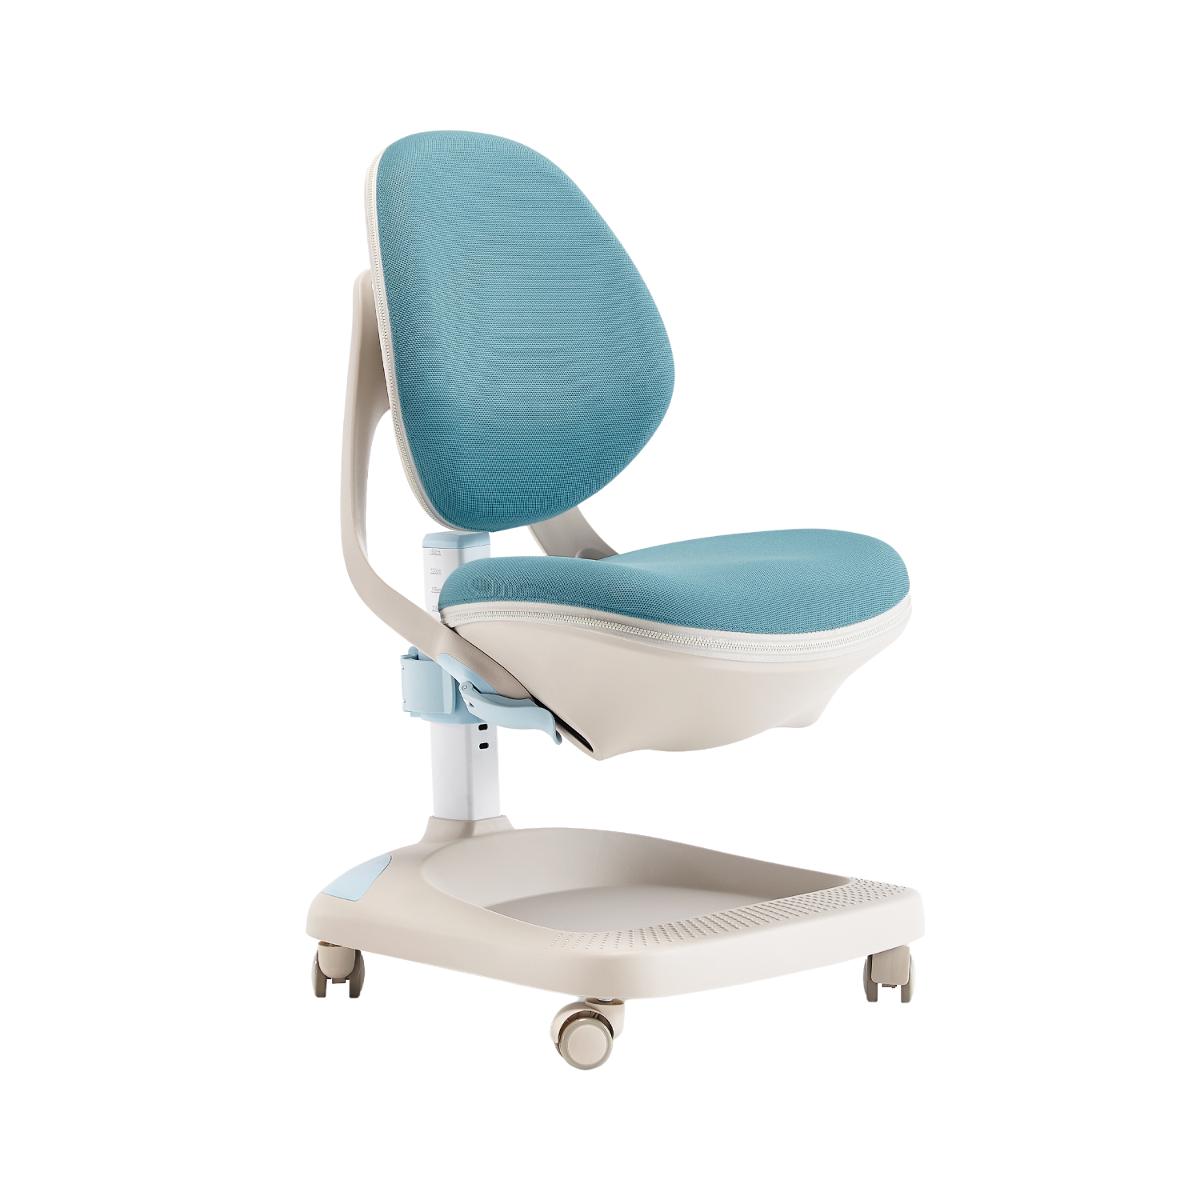 Super Chair เก้าอี้เพื่อสุขภาพ สำหรับเด็ก รุ่น 7501A-2 Blue